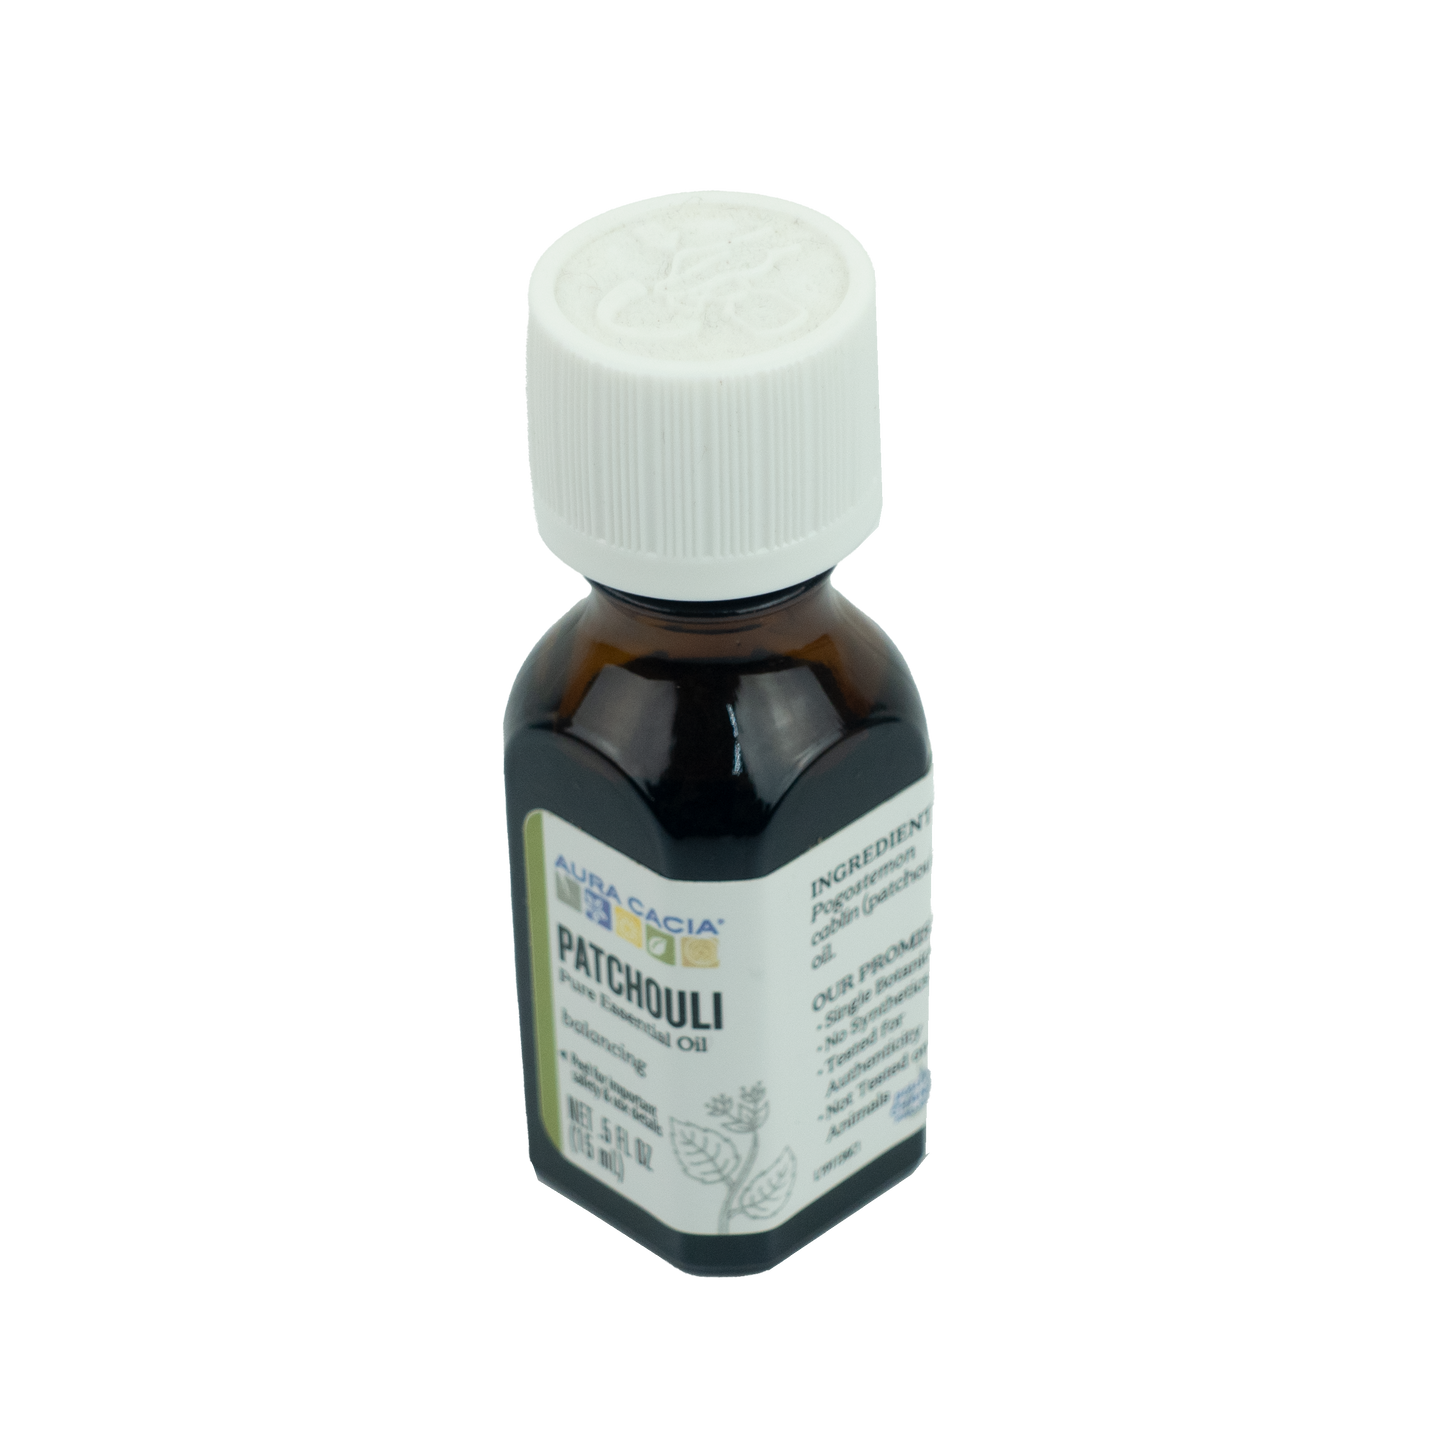 Aura Cacia - Patchouli Essential Oil (0.5 oz)